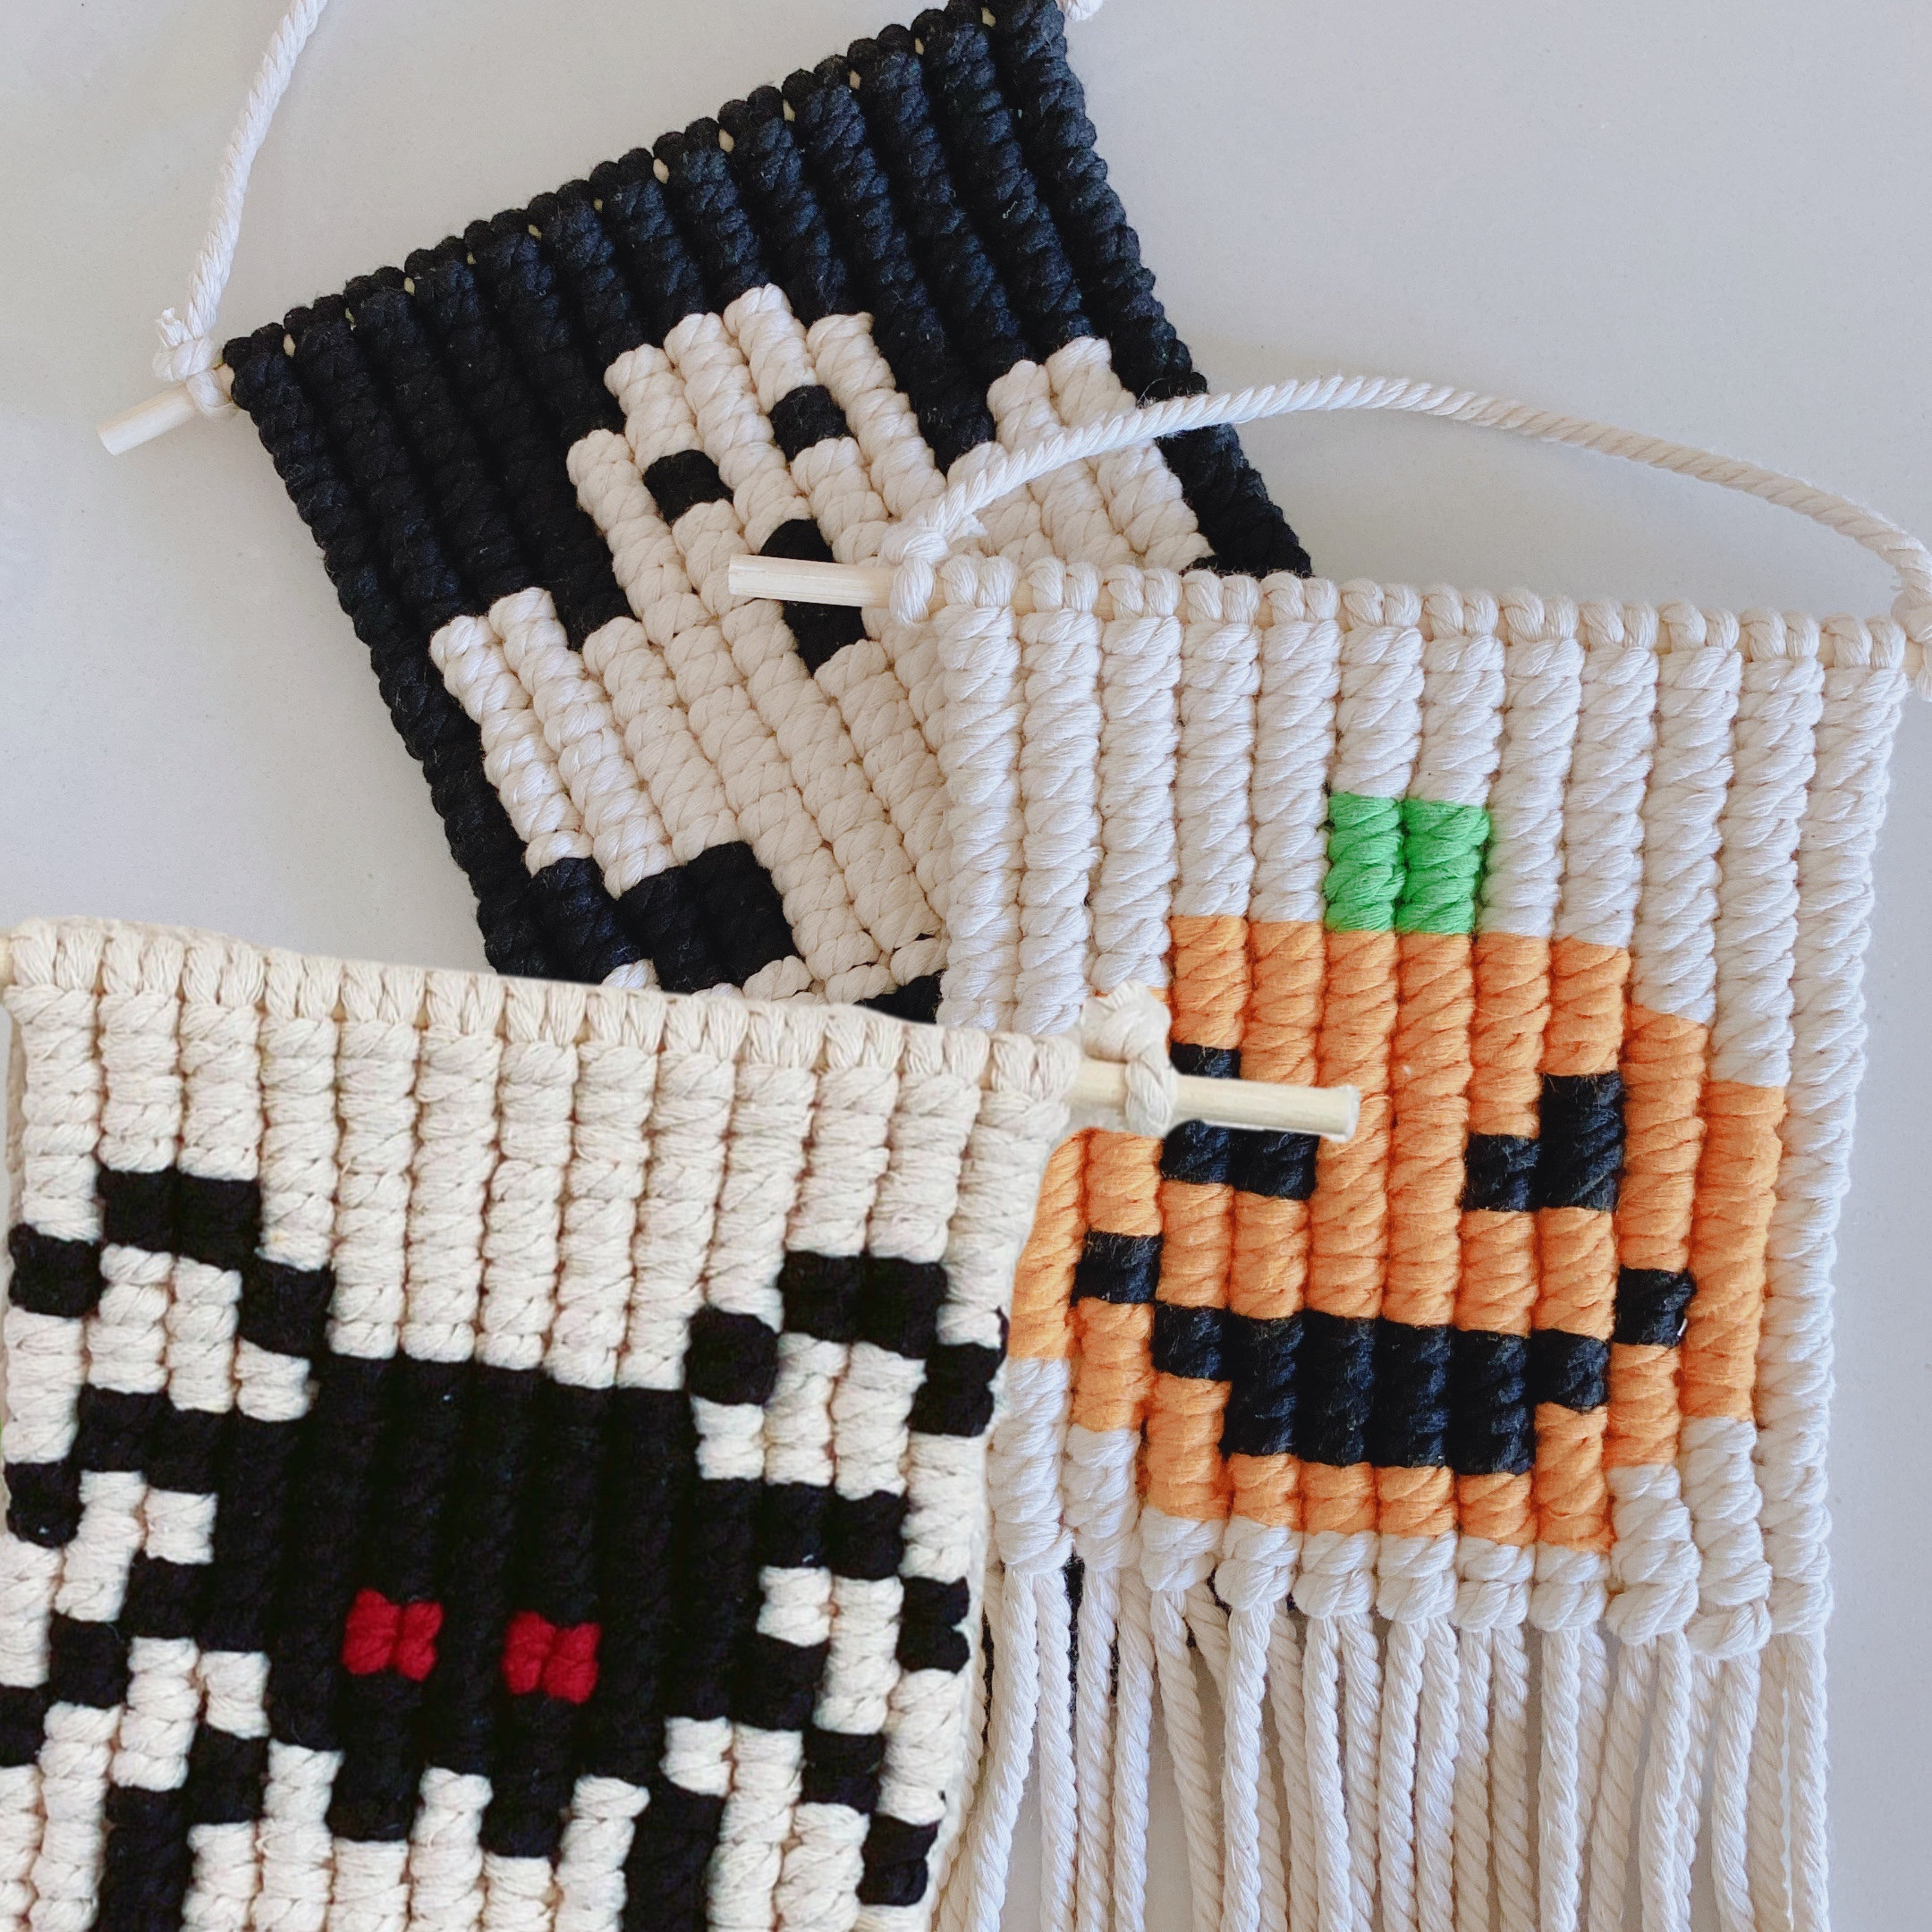 Halloween Macrame Patterns and Kits